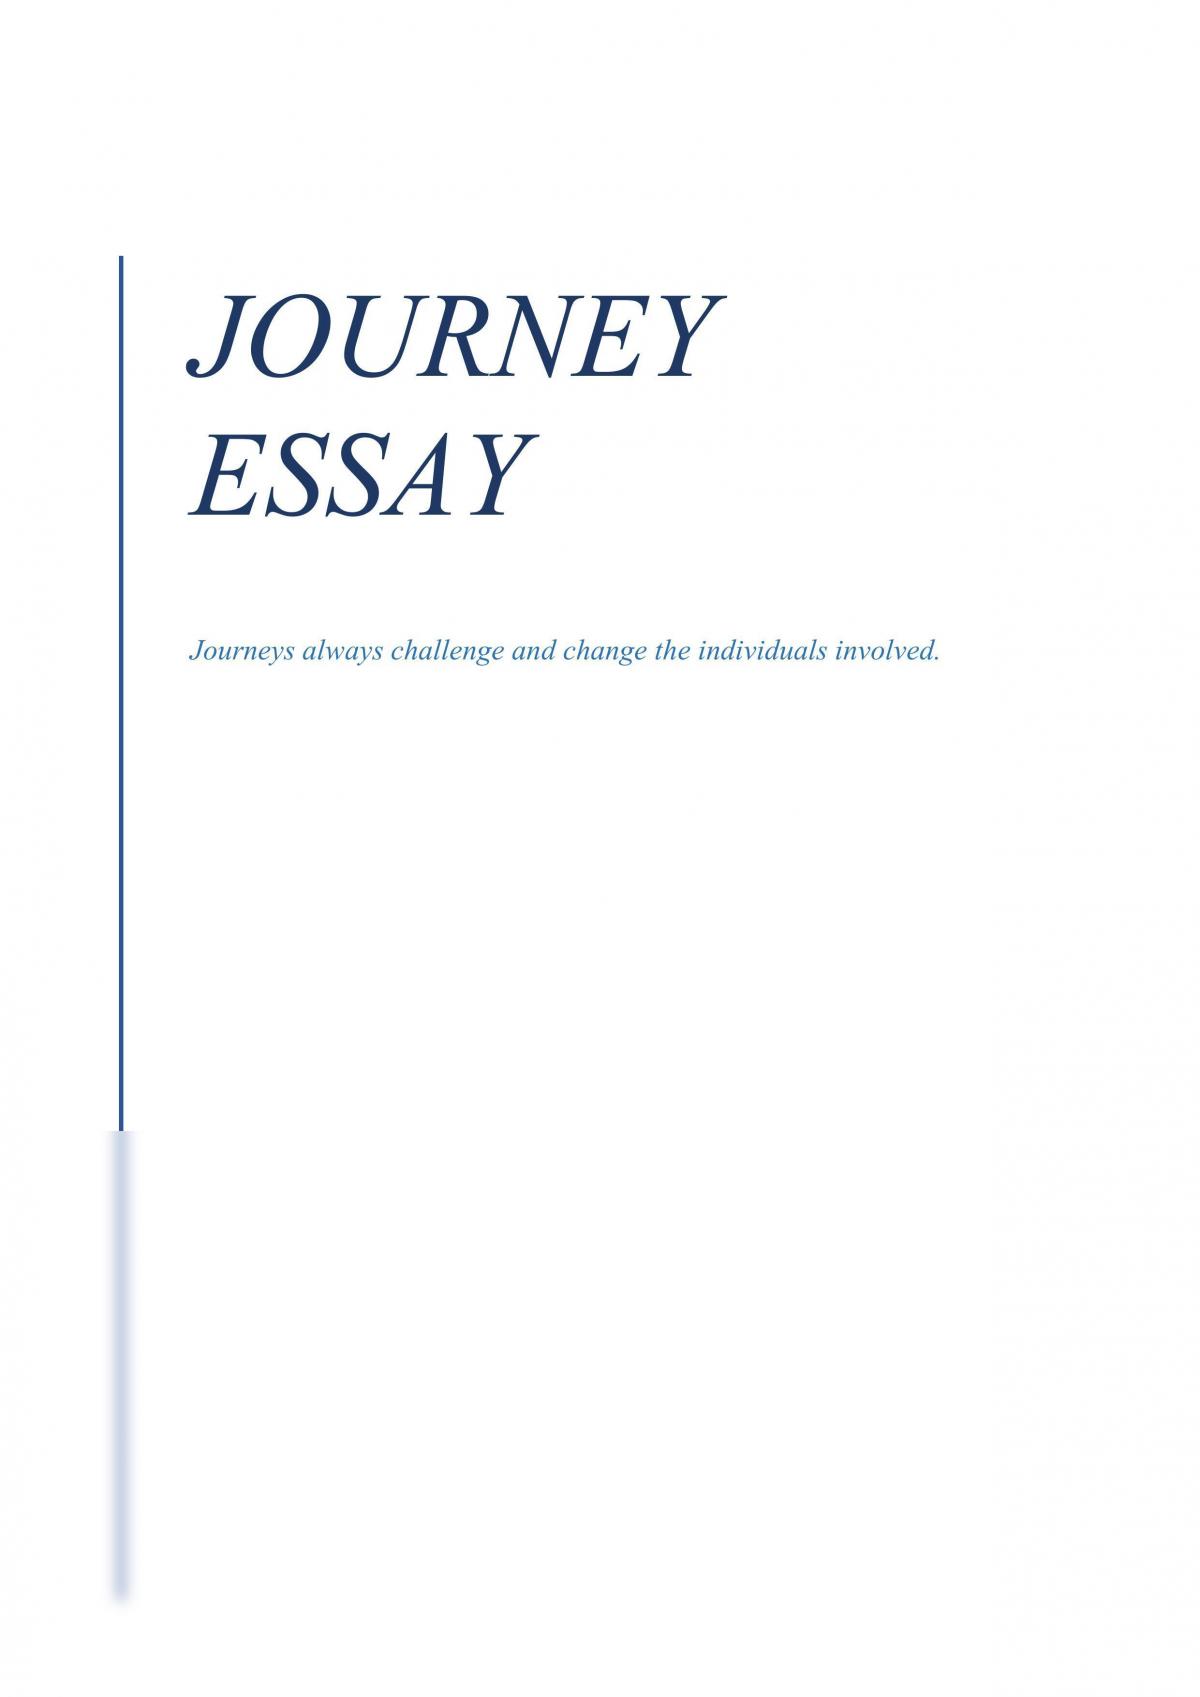 write essay journey